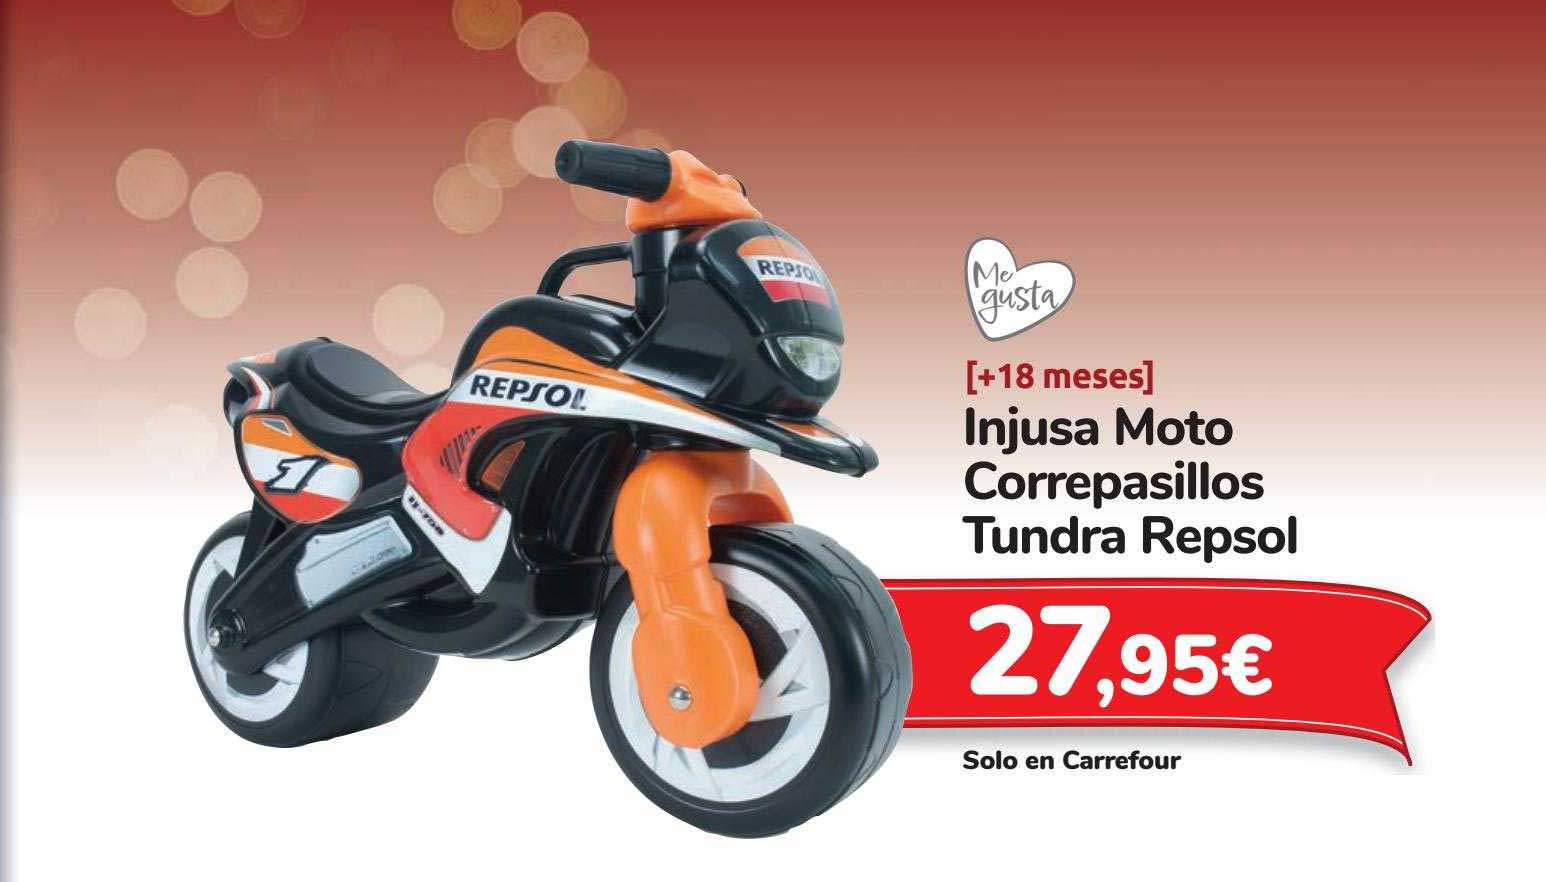 Oferta Injusa Moto Correpasillos Tundra Repsol en Carrefour 